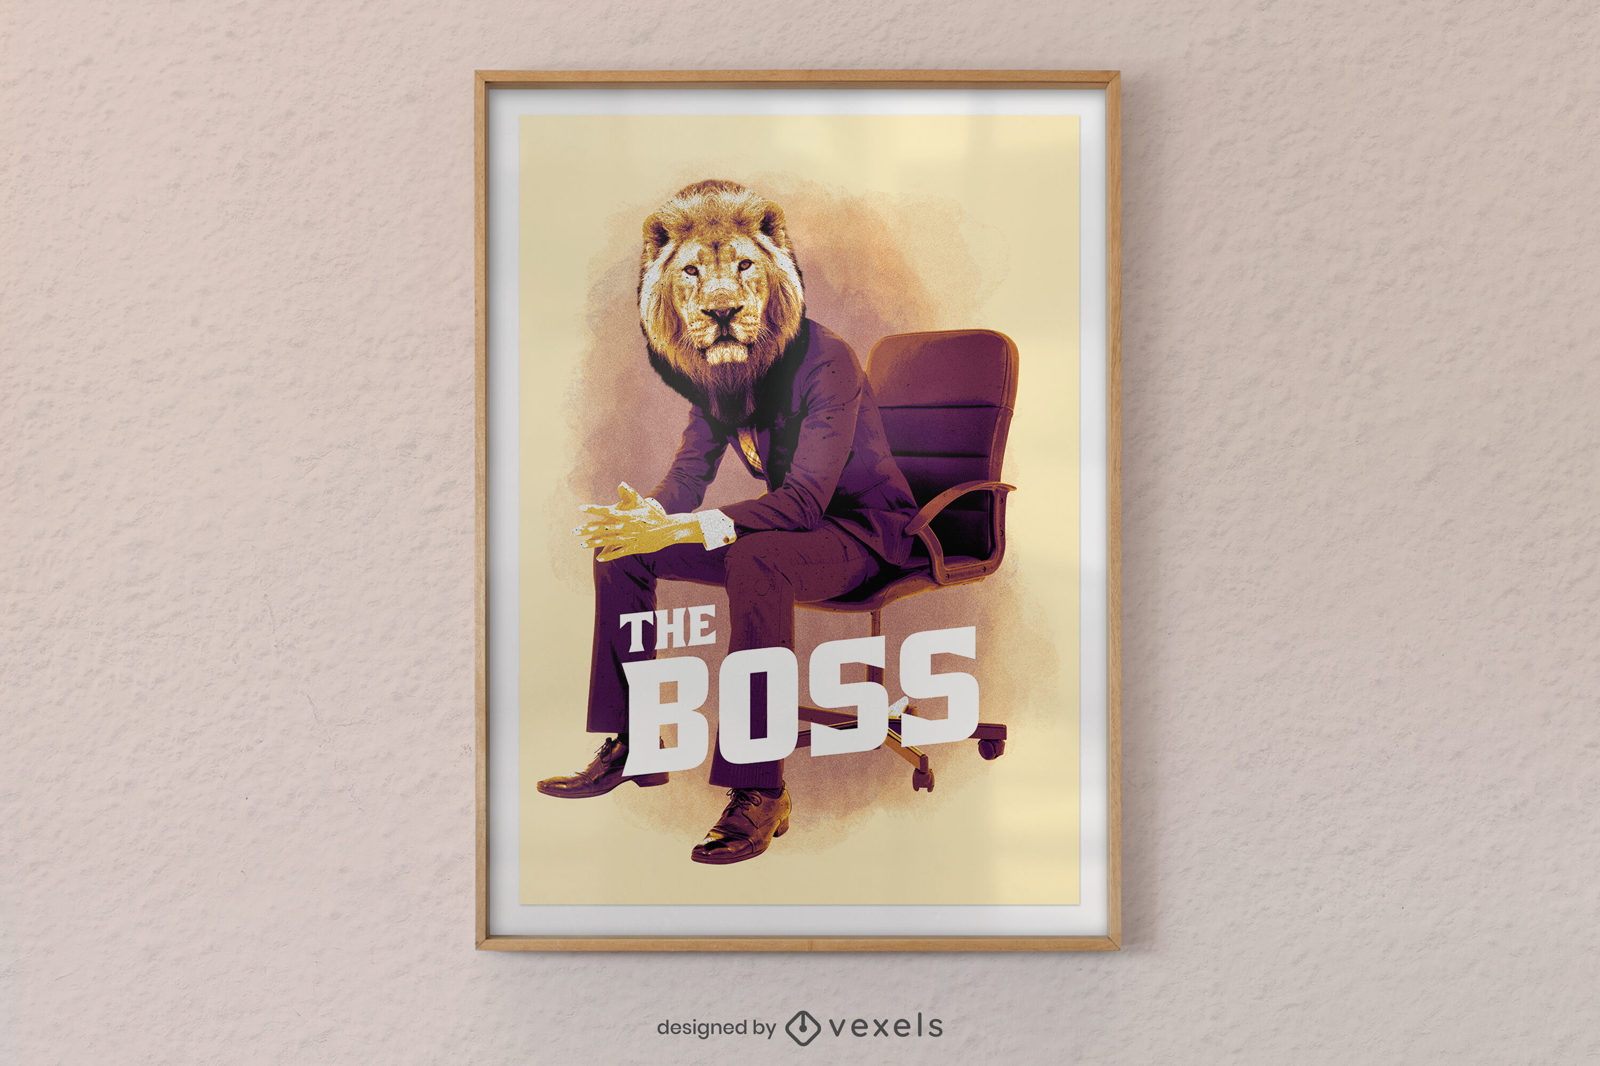 The boss lion poster design